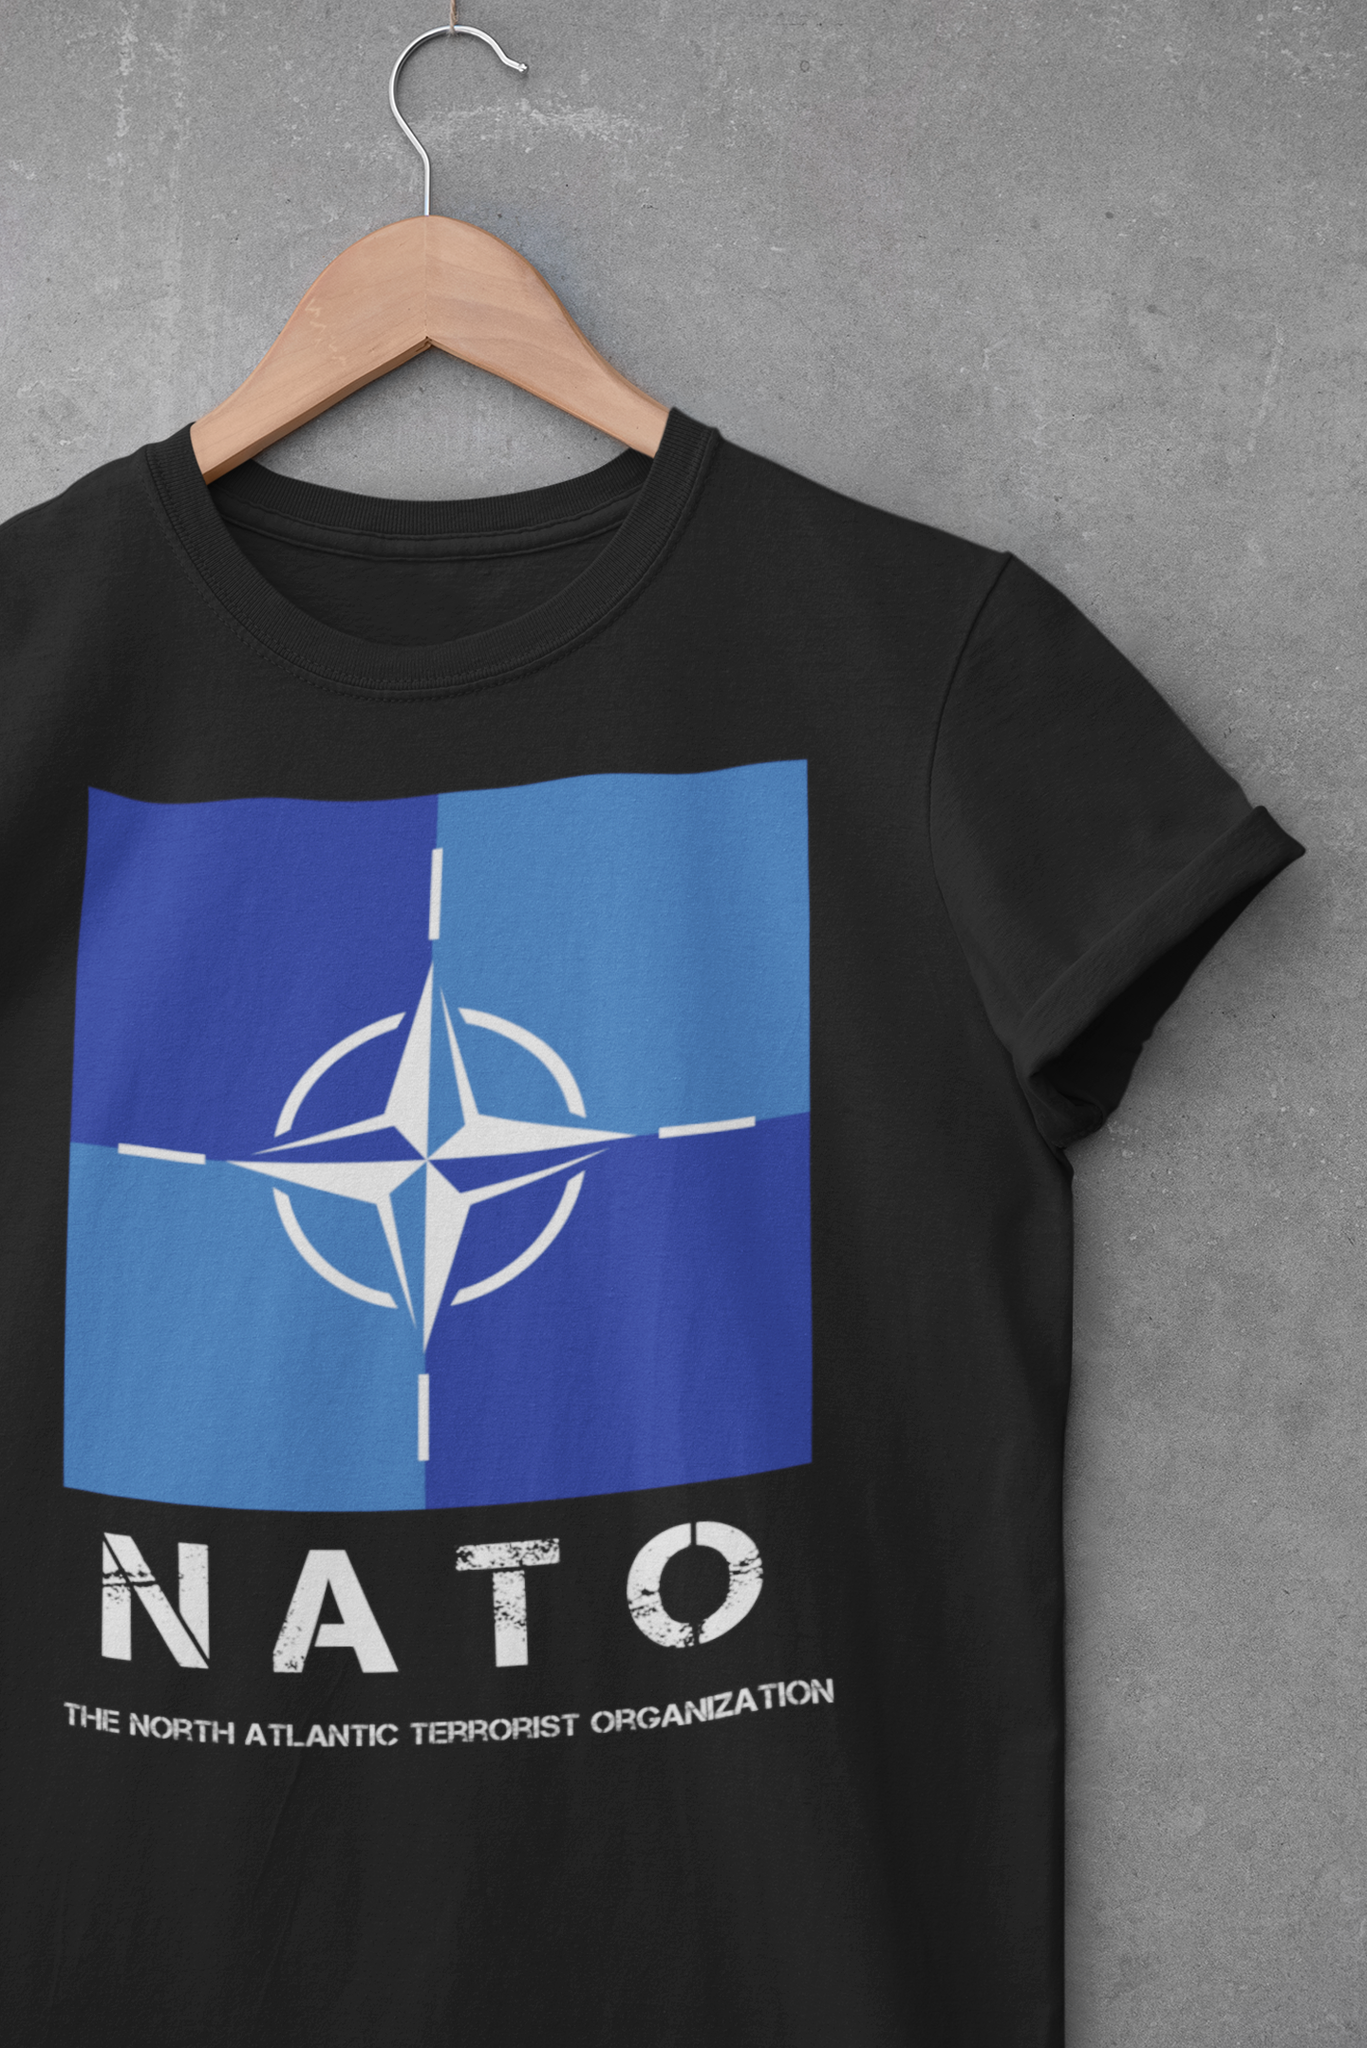 NATO - The North Atlantic Terror Organization - T-Shirt Herr/Men